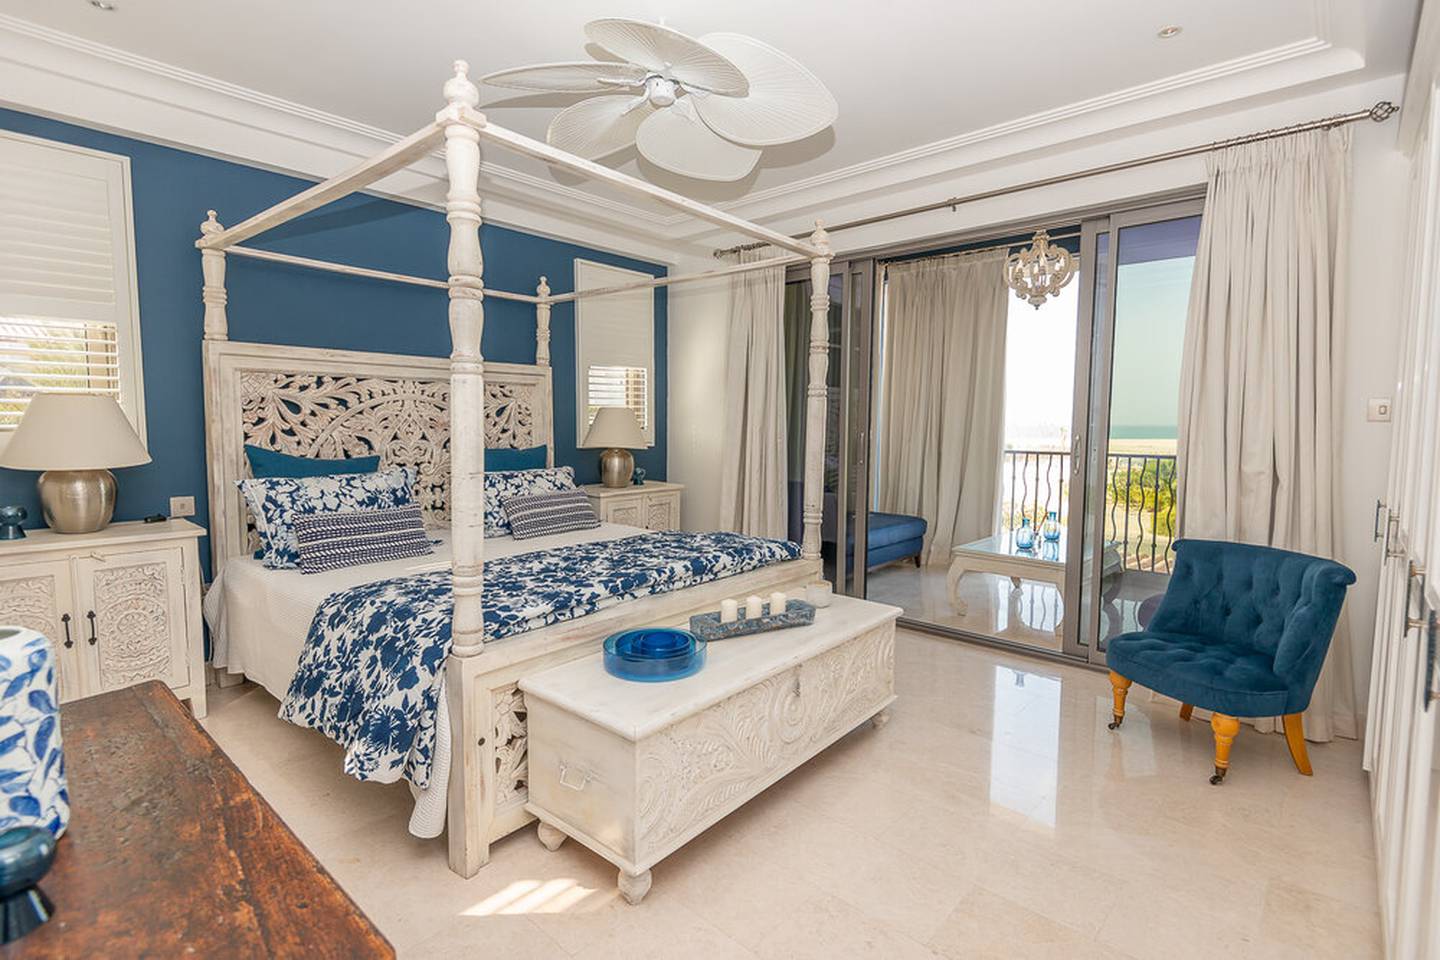 Mediterranean-inspired interiors await at Villa Lazuli on Saadiyat Island. Photo: Airbnb / www.villalazuli.com